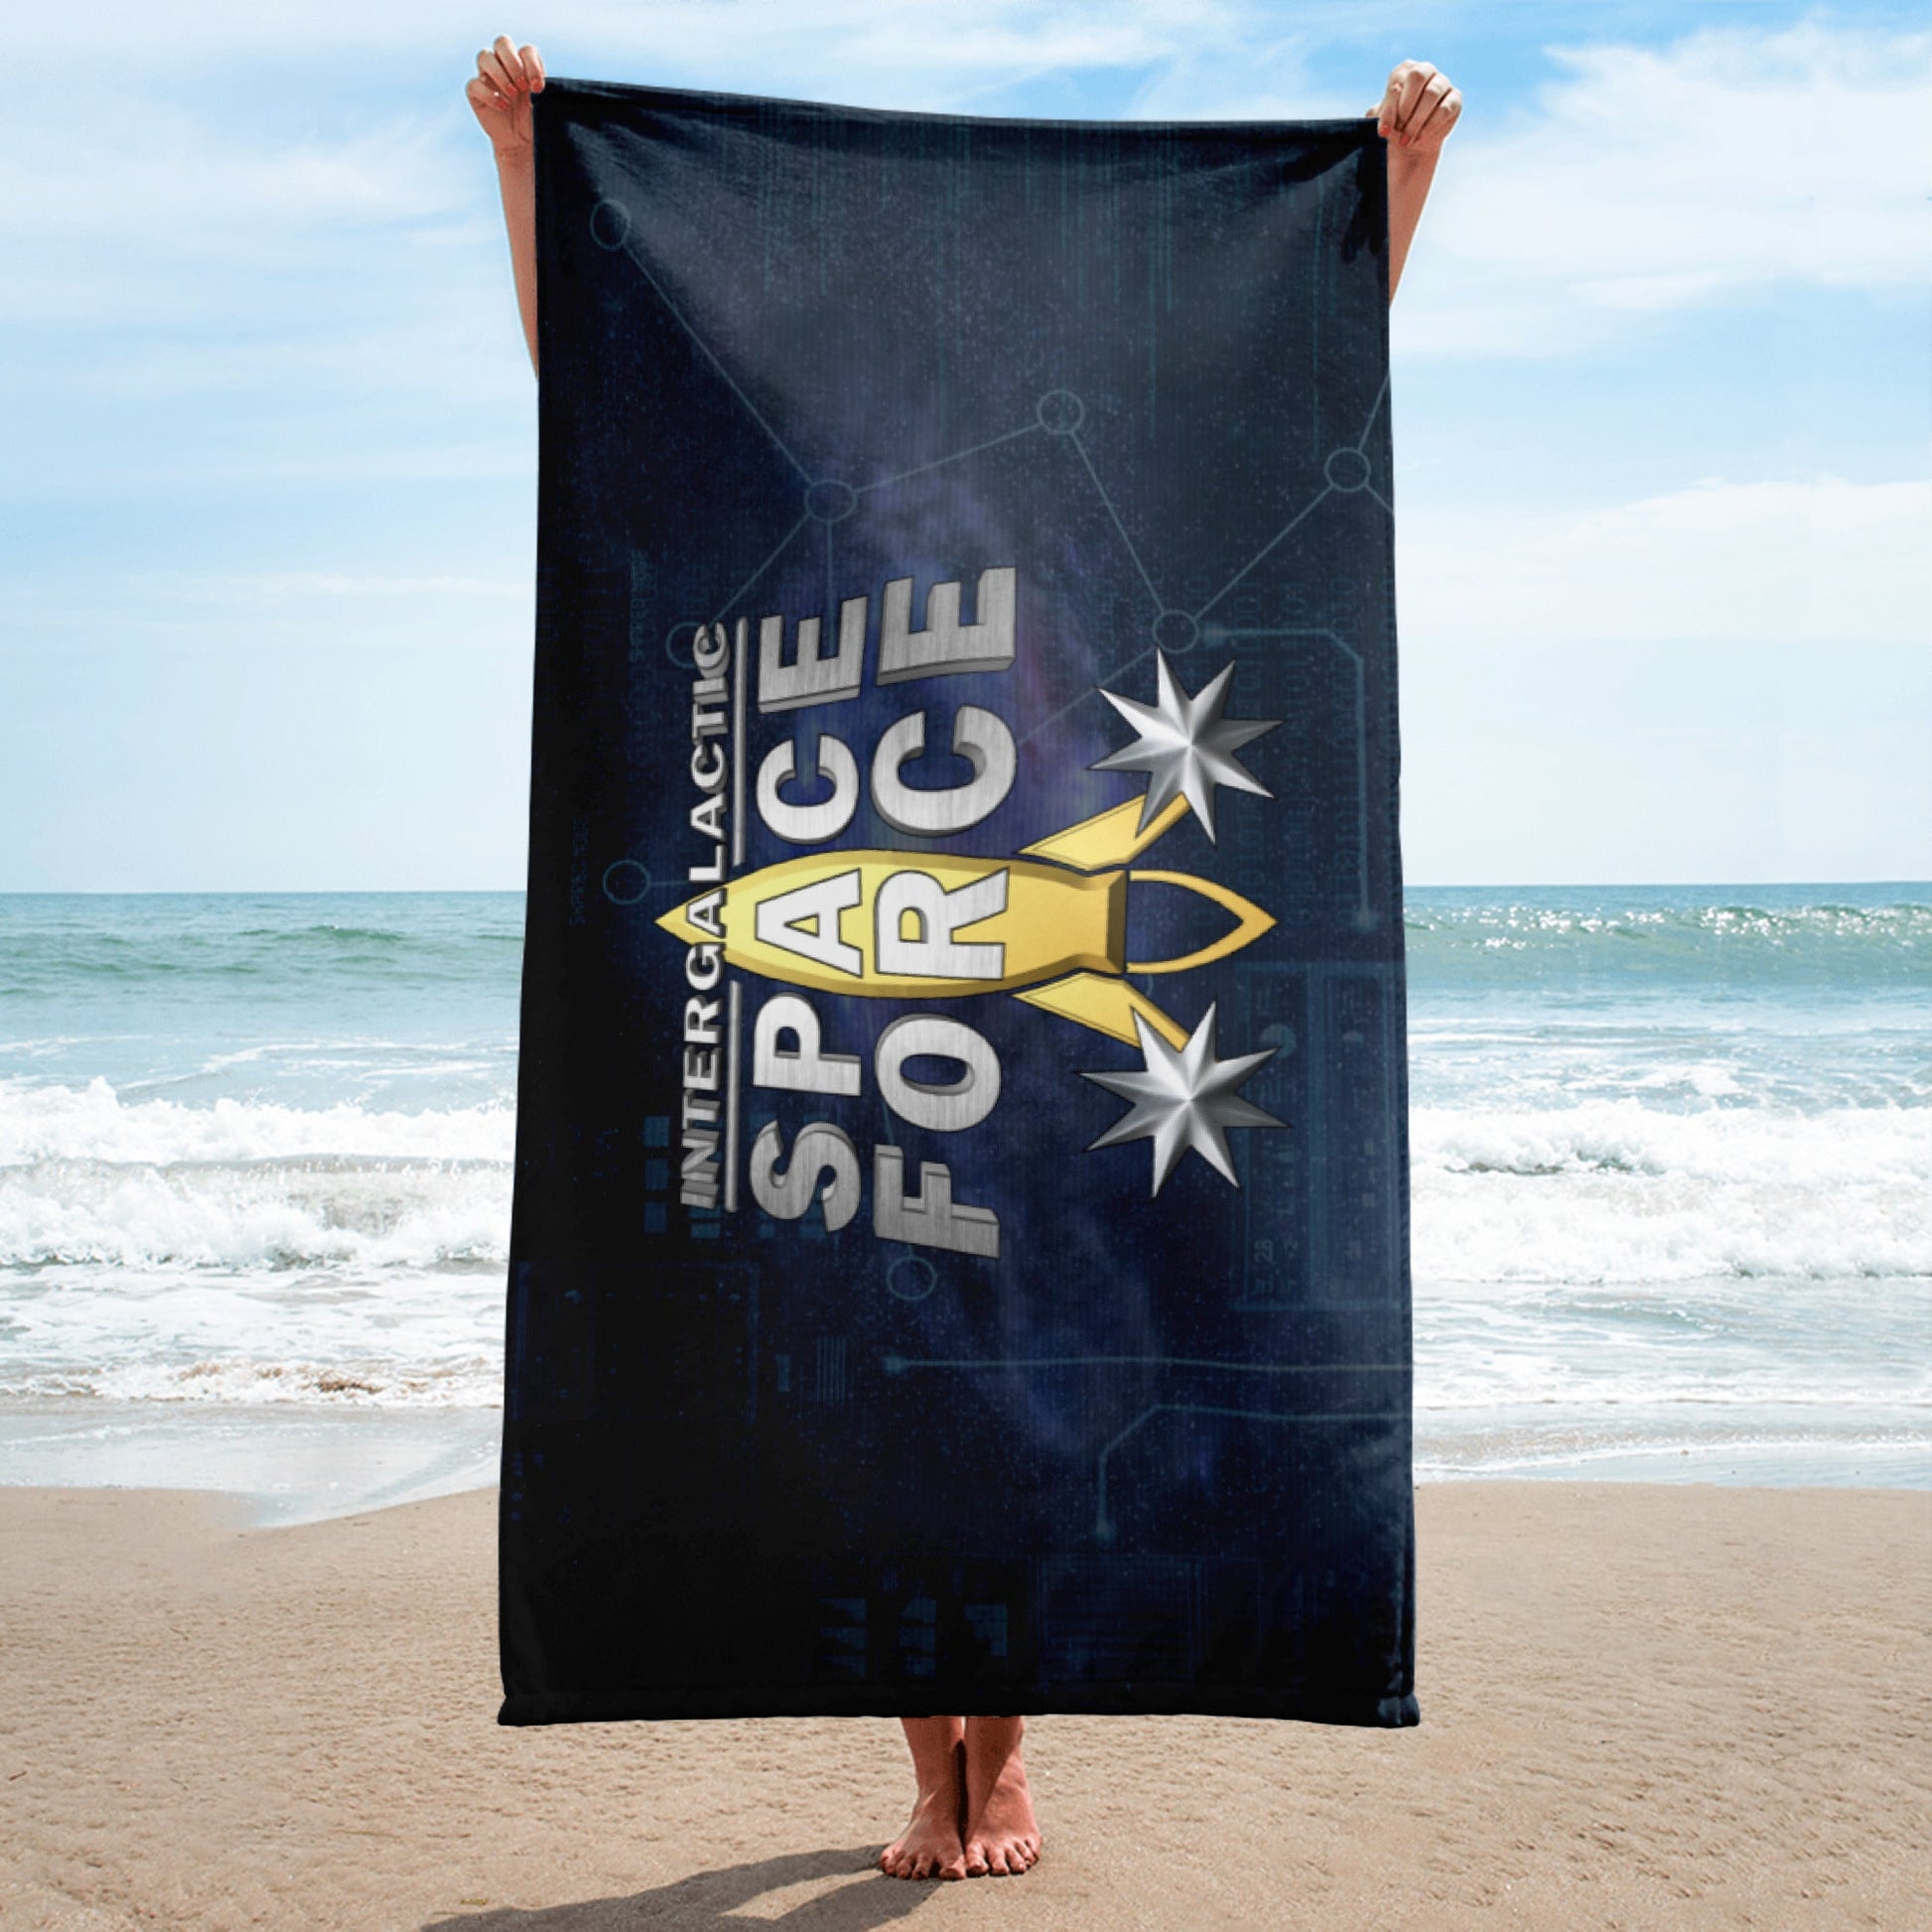 Luxury Beach Towel | Intergalactic Space Force - Spectral Ink Shop - Beach Towels -8494964_8874